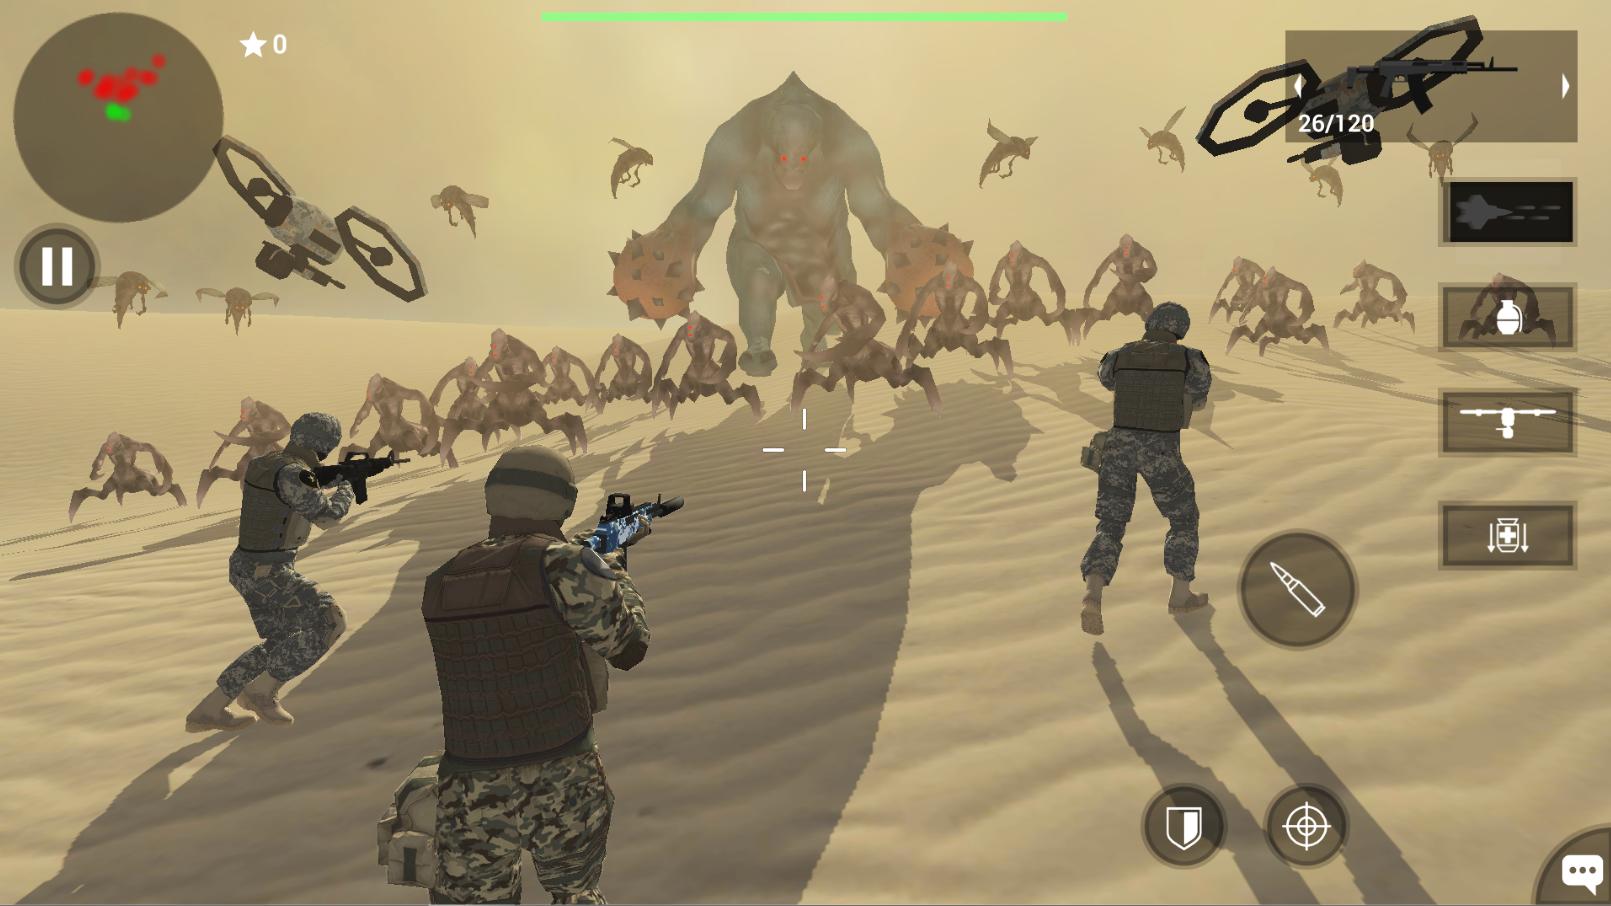 Earth Protect Squad Third Person Shooting Game 2.00.32b Screenshot 9